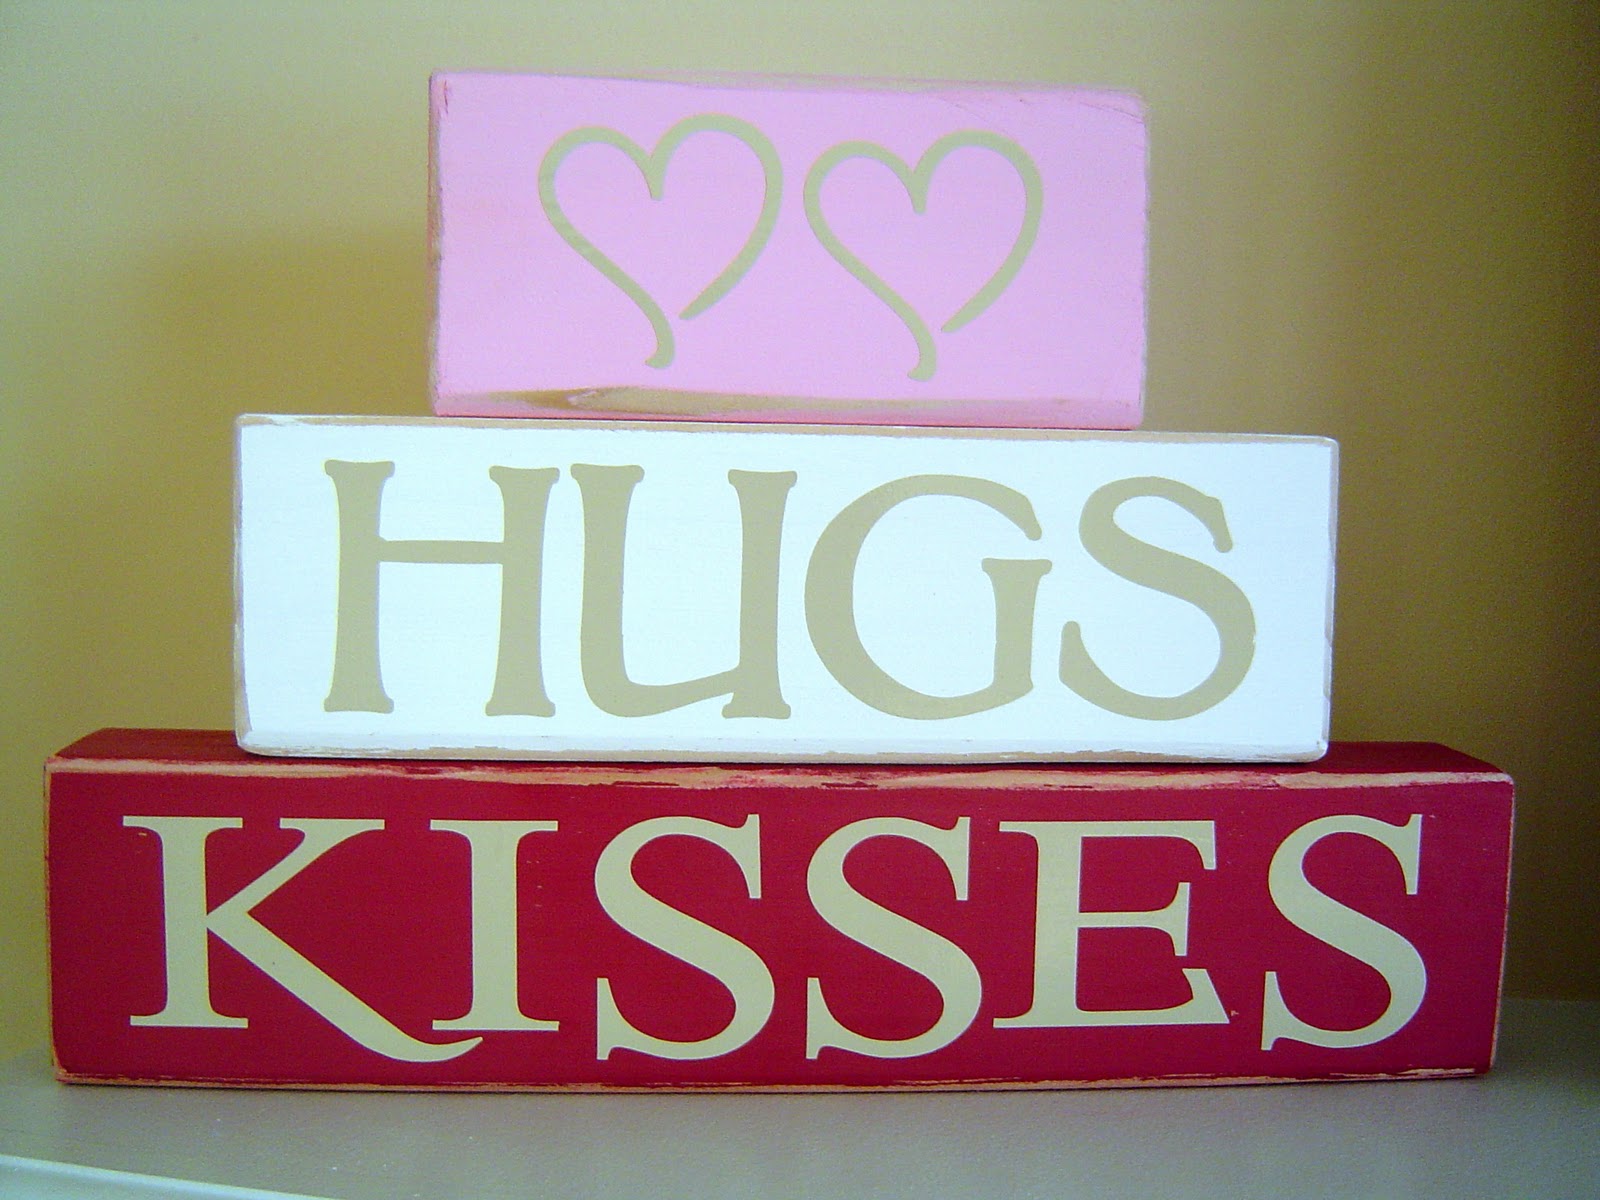 Hearts* Hugs and Kisses.